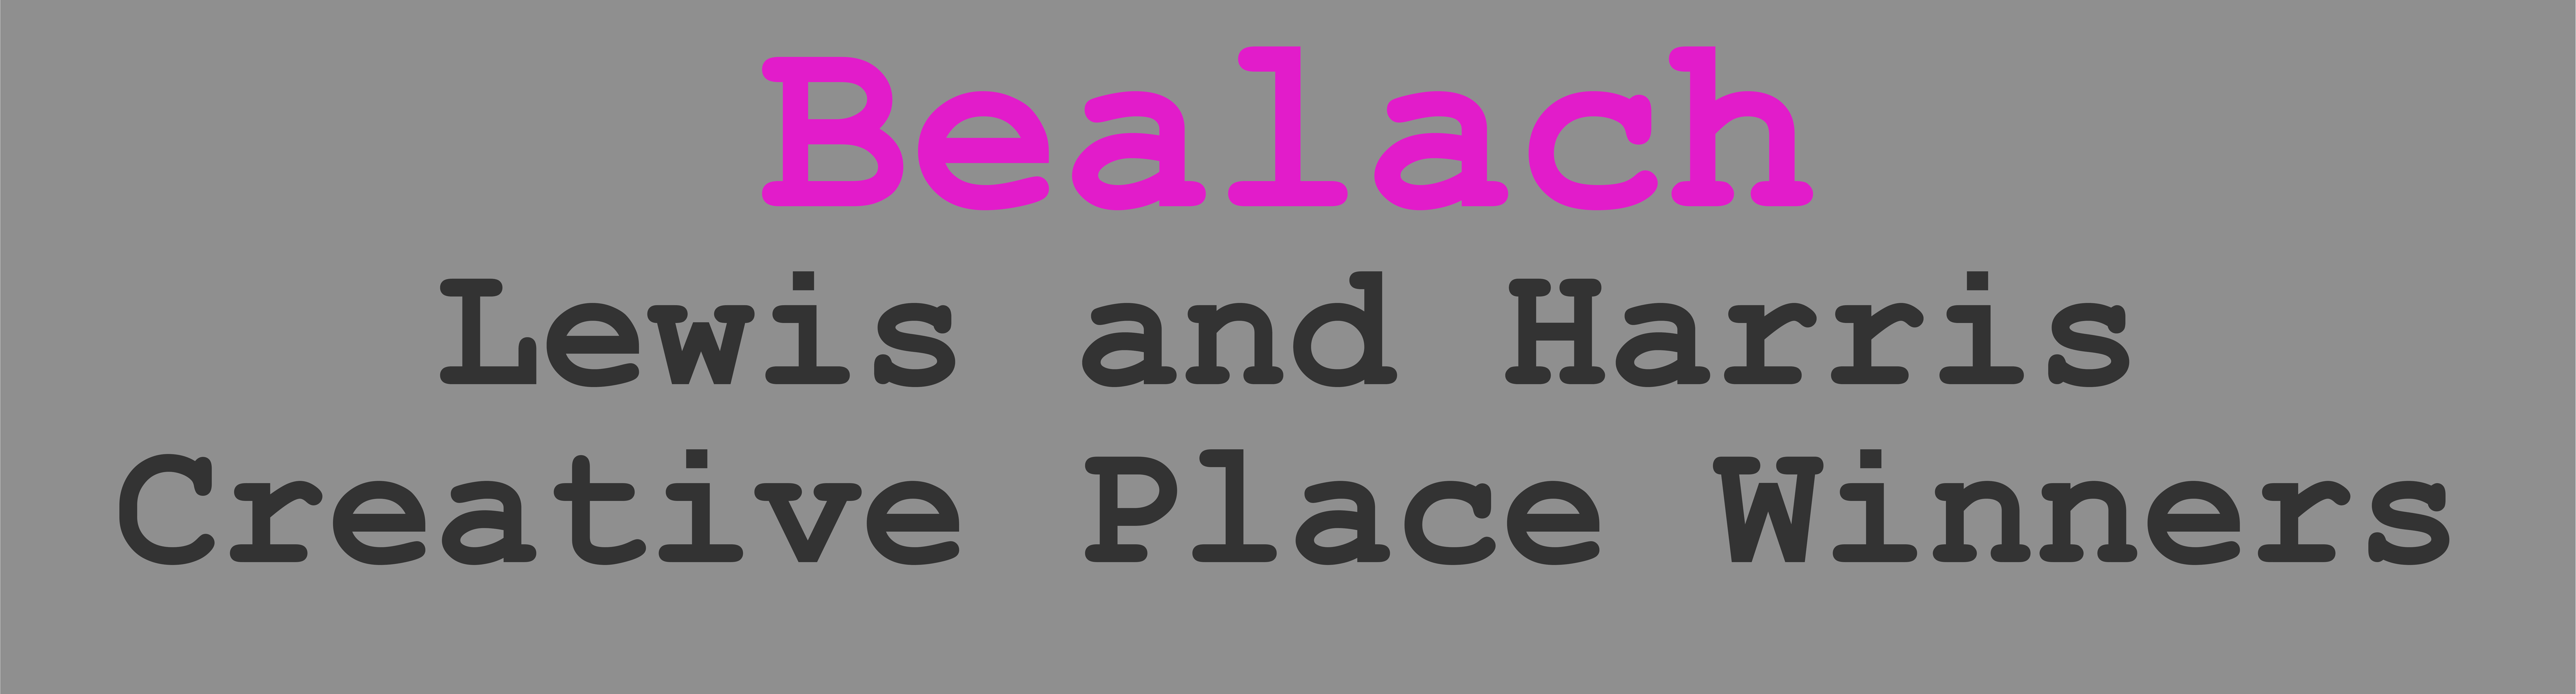 y:\creative place awards\8. logos\bealach logo\'s\bealach logo.jpg